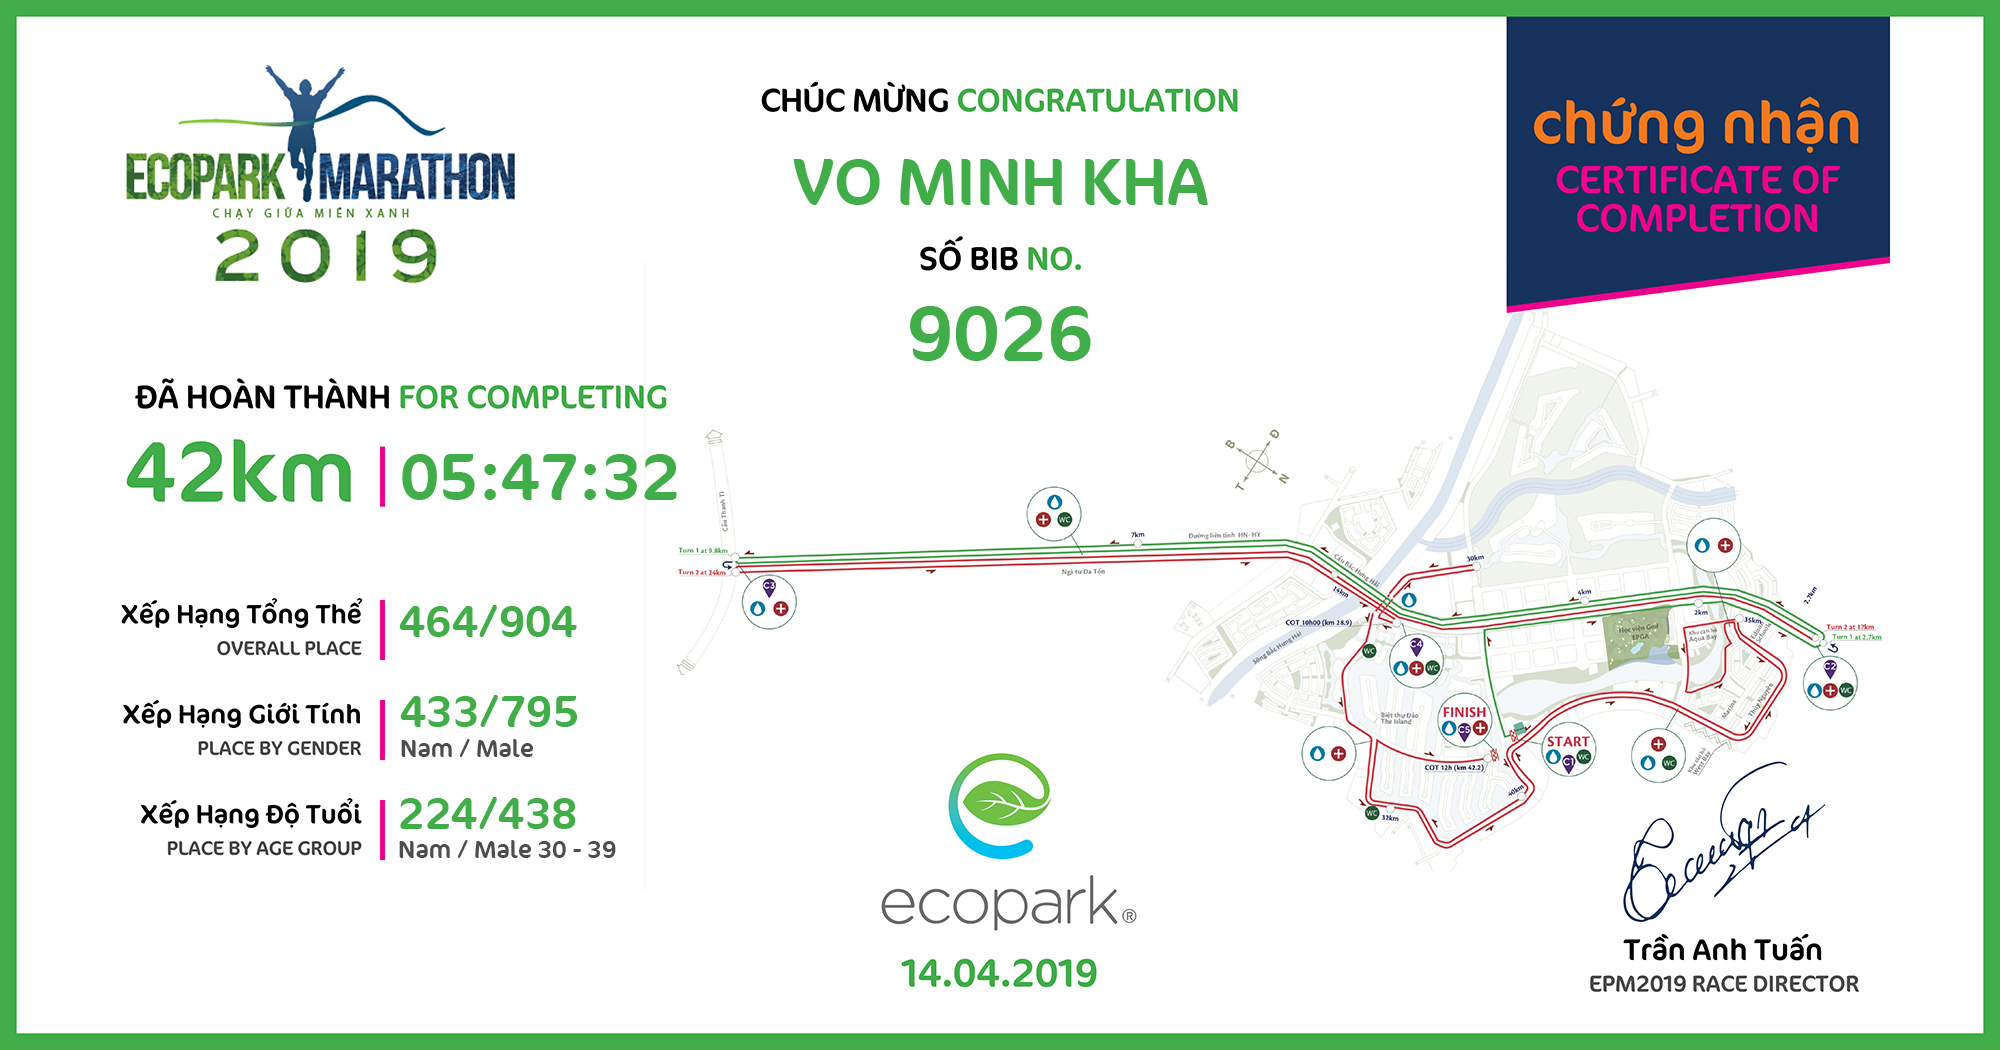 9026 - Vo Minh Kha